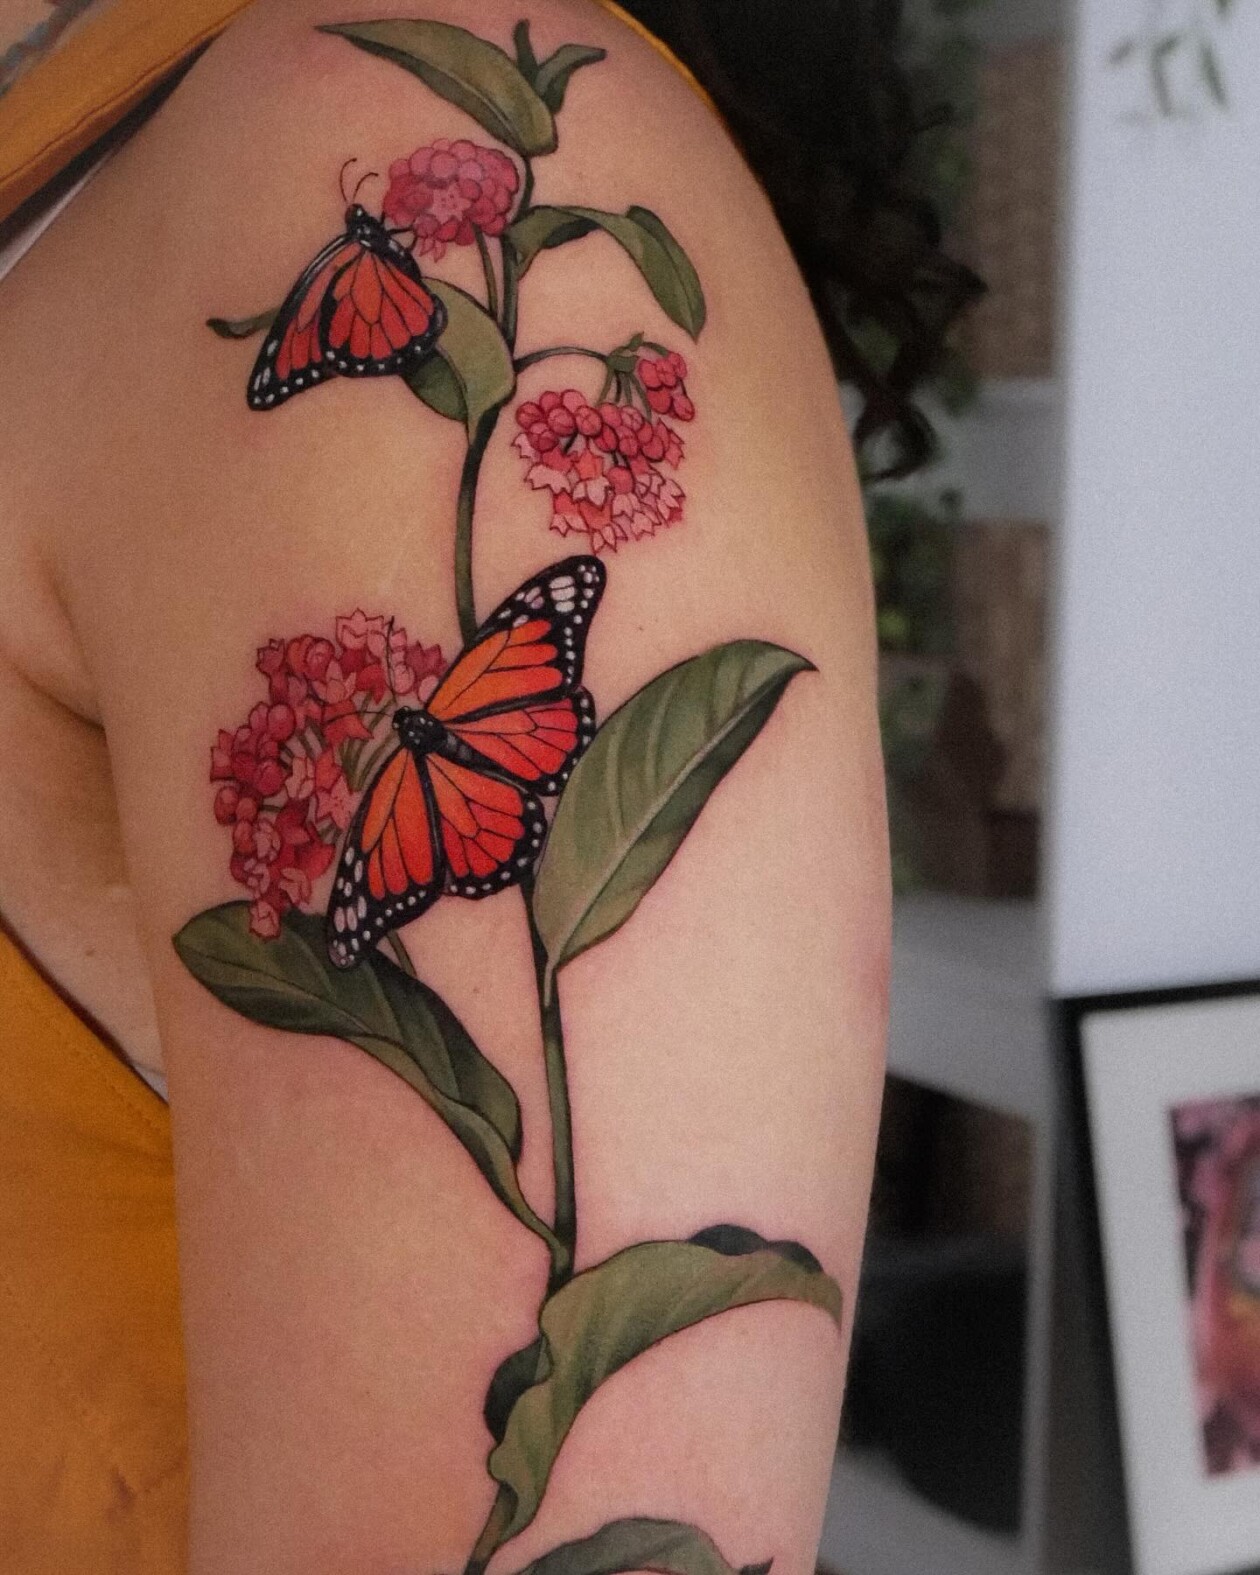 Botany And Animal Illustrative Tattoos By Vanessa Core (9)